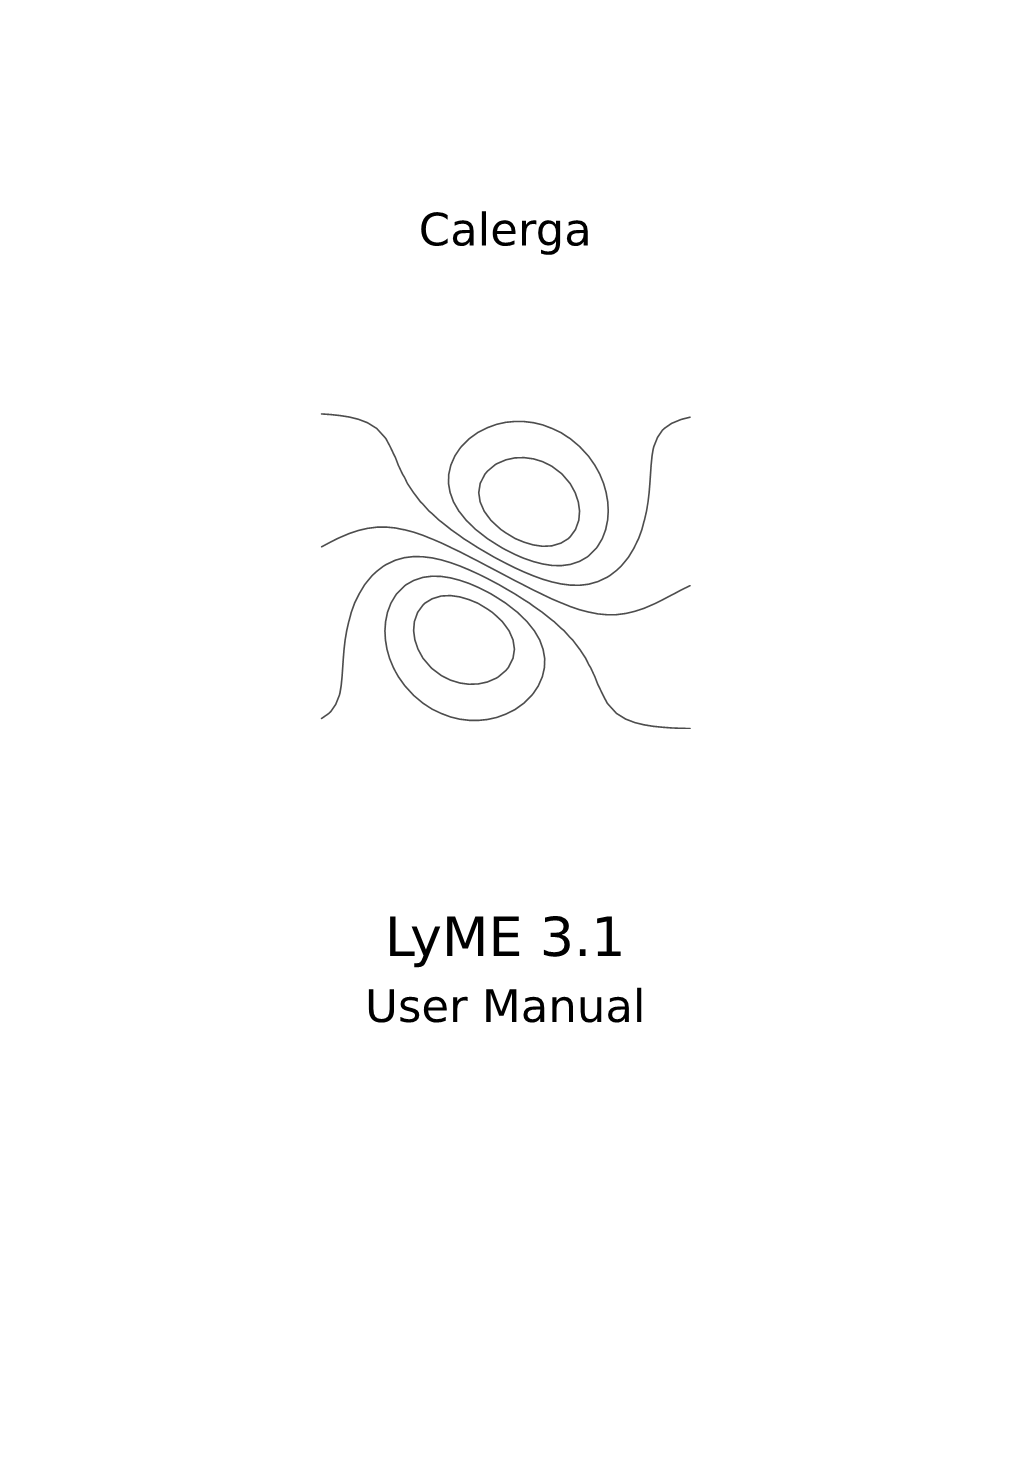 Lyme User Manual ©1999-2008, Calerga Sàrl